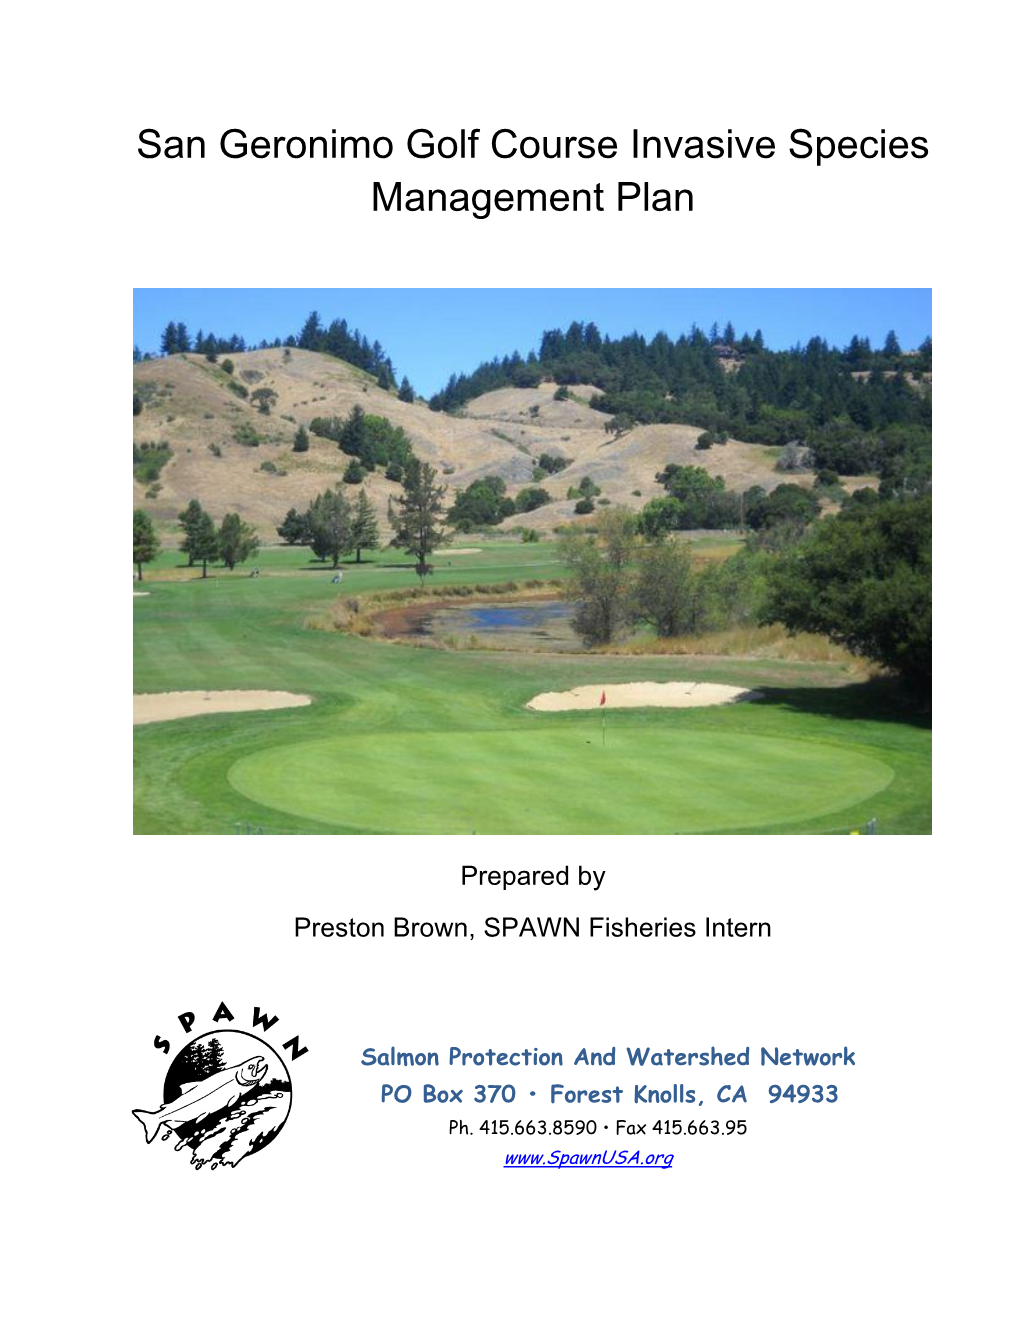 San Geronimo Golf Course Invasive Species Management Plan Page 2